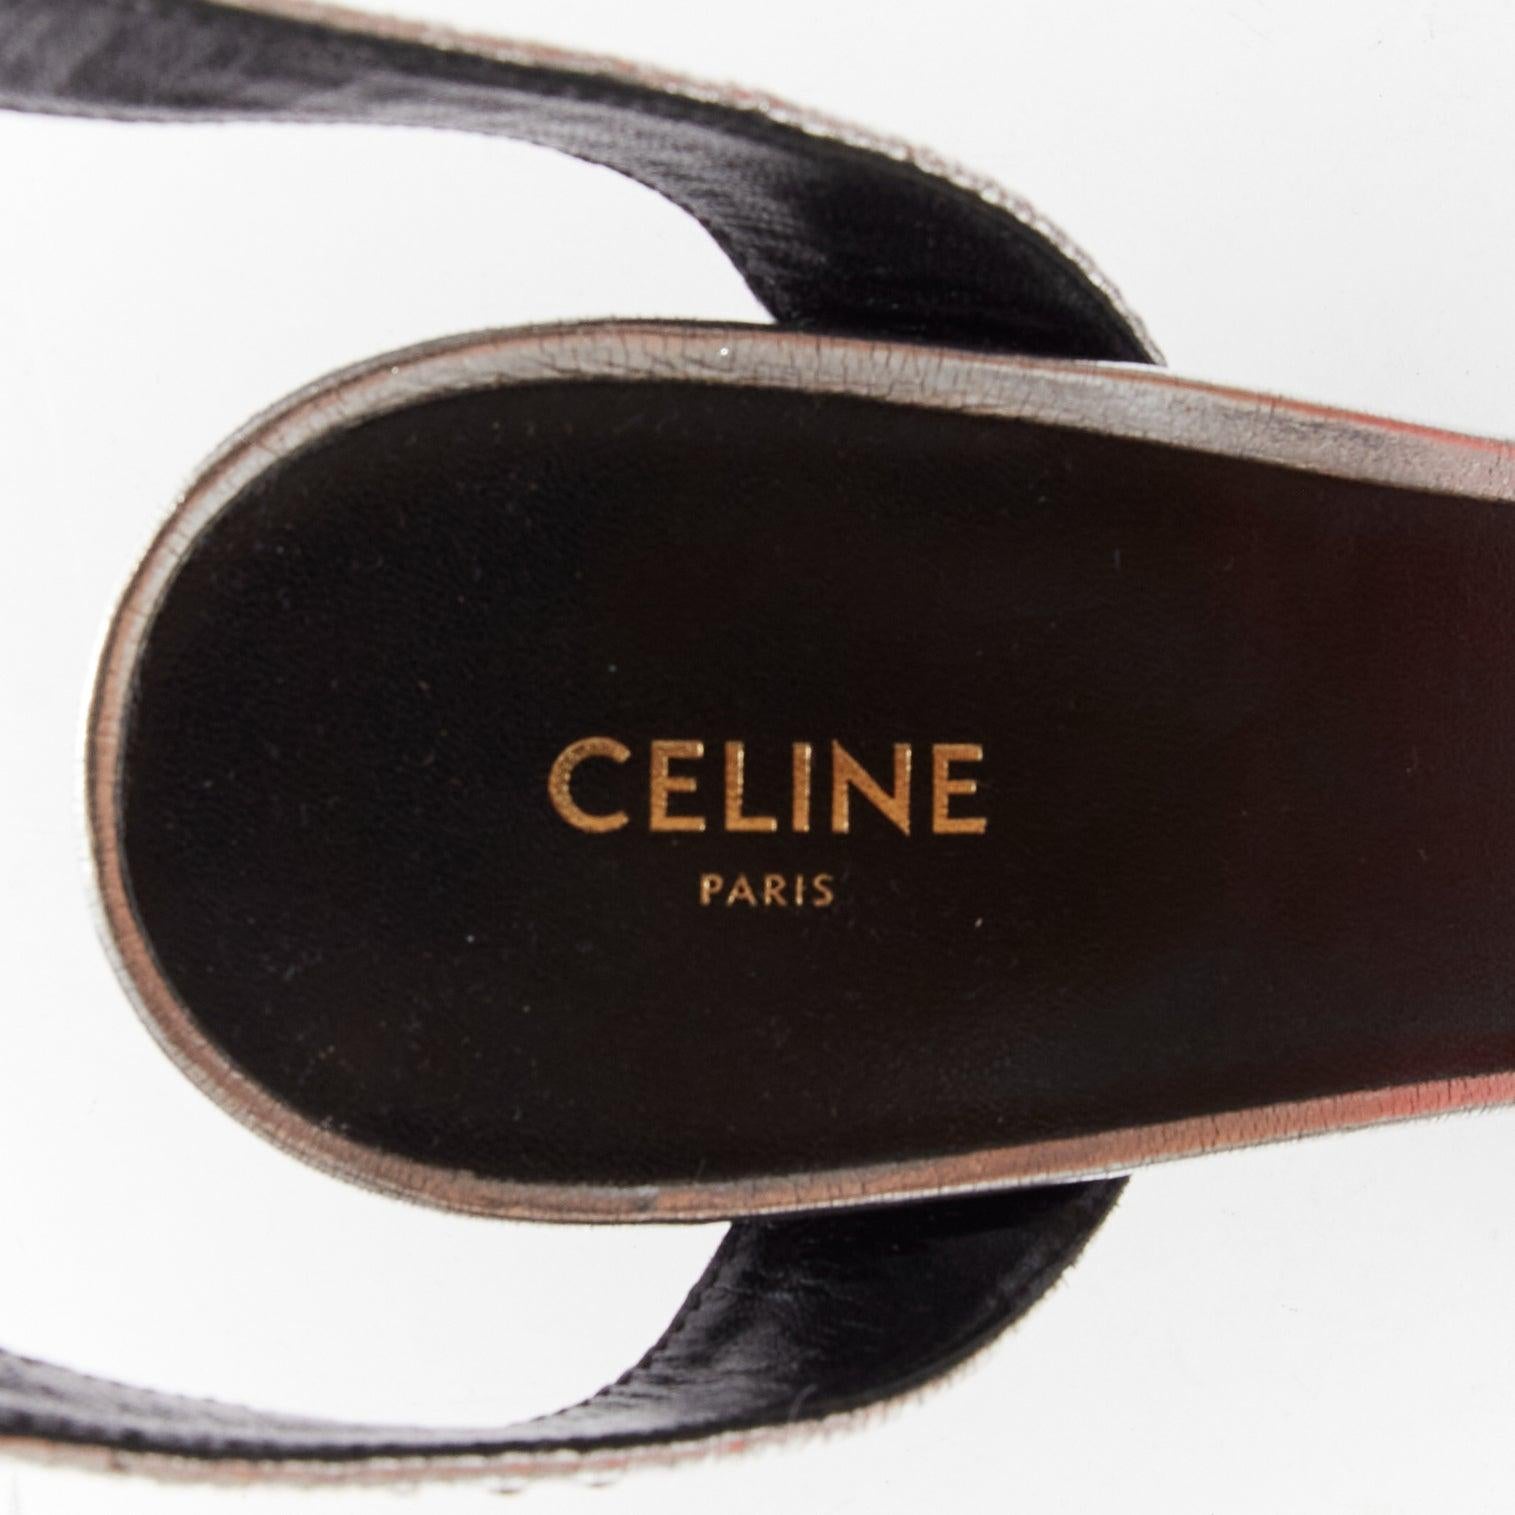 CELINE Hedi Slimane silver leather PVC conical heels EU38 For Sale 5